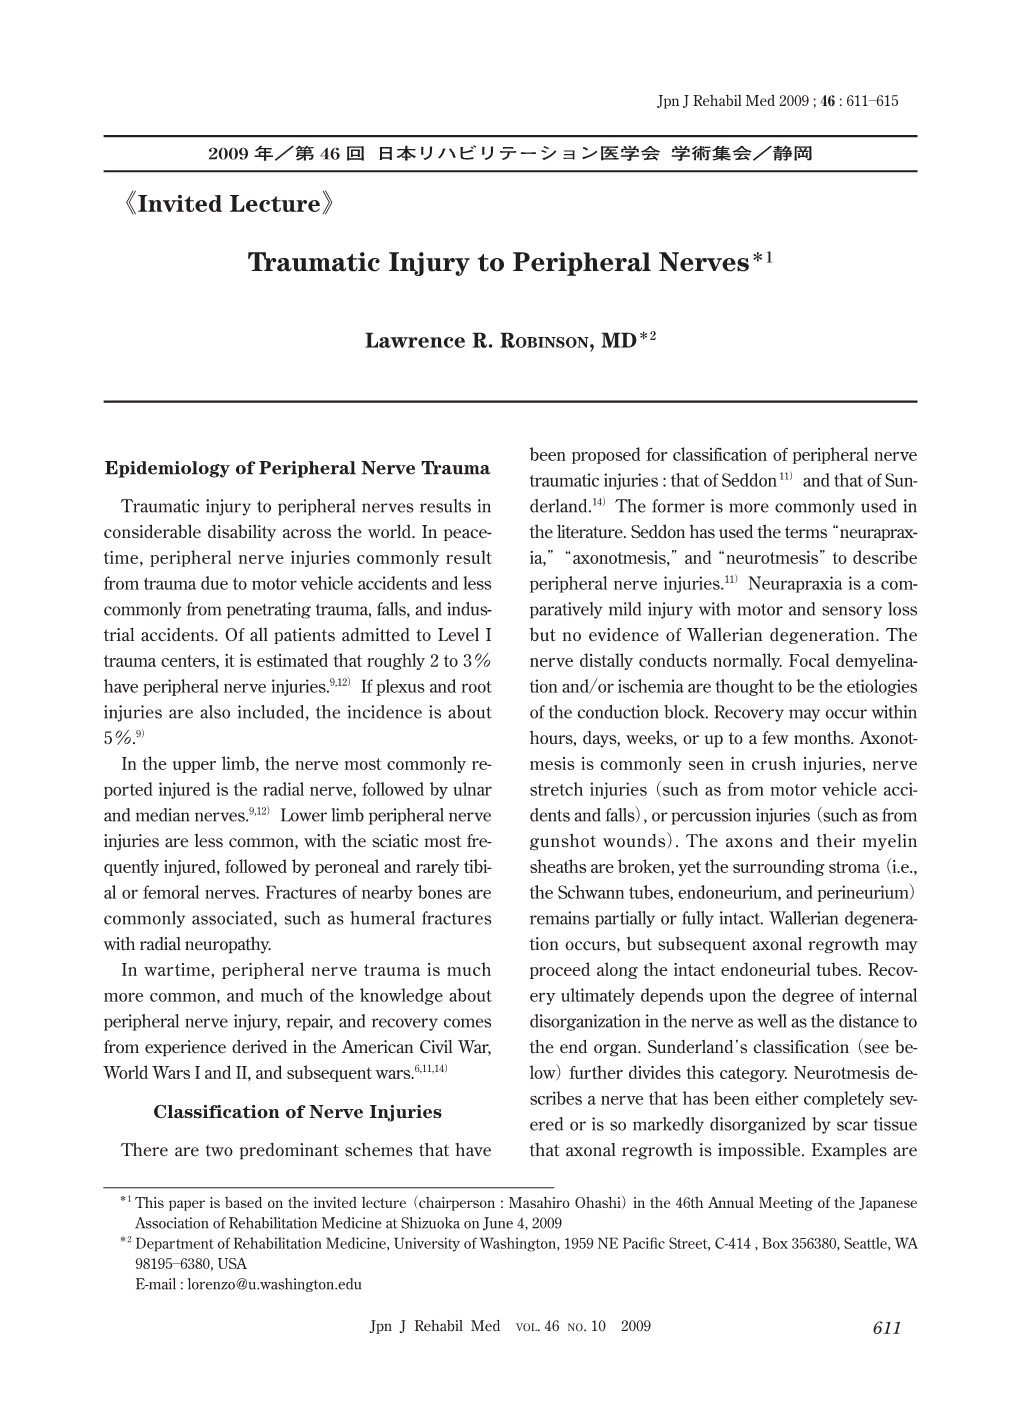 Traumatic Injury to Peripheral Nerves＊1